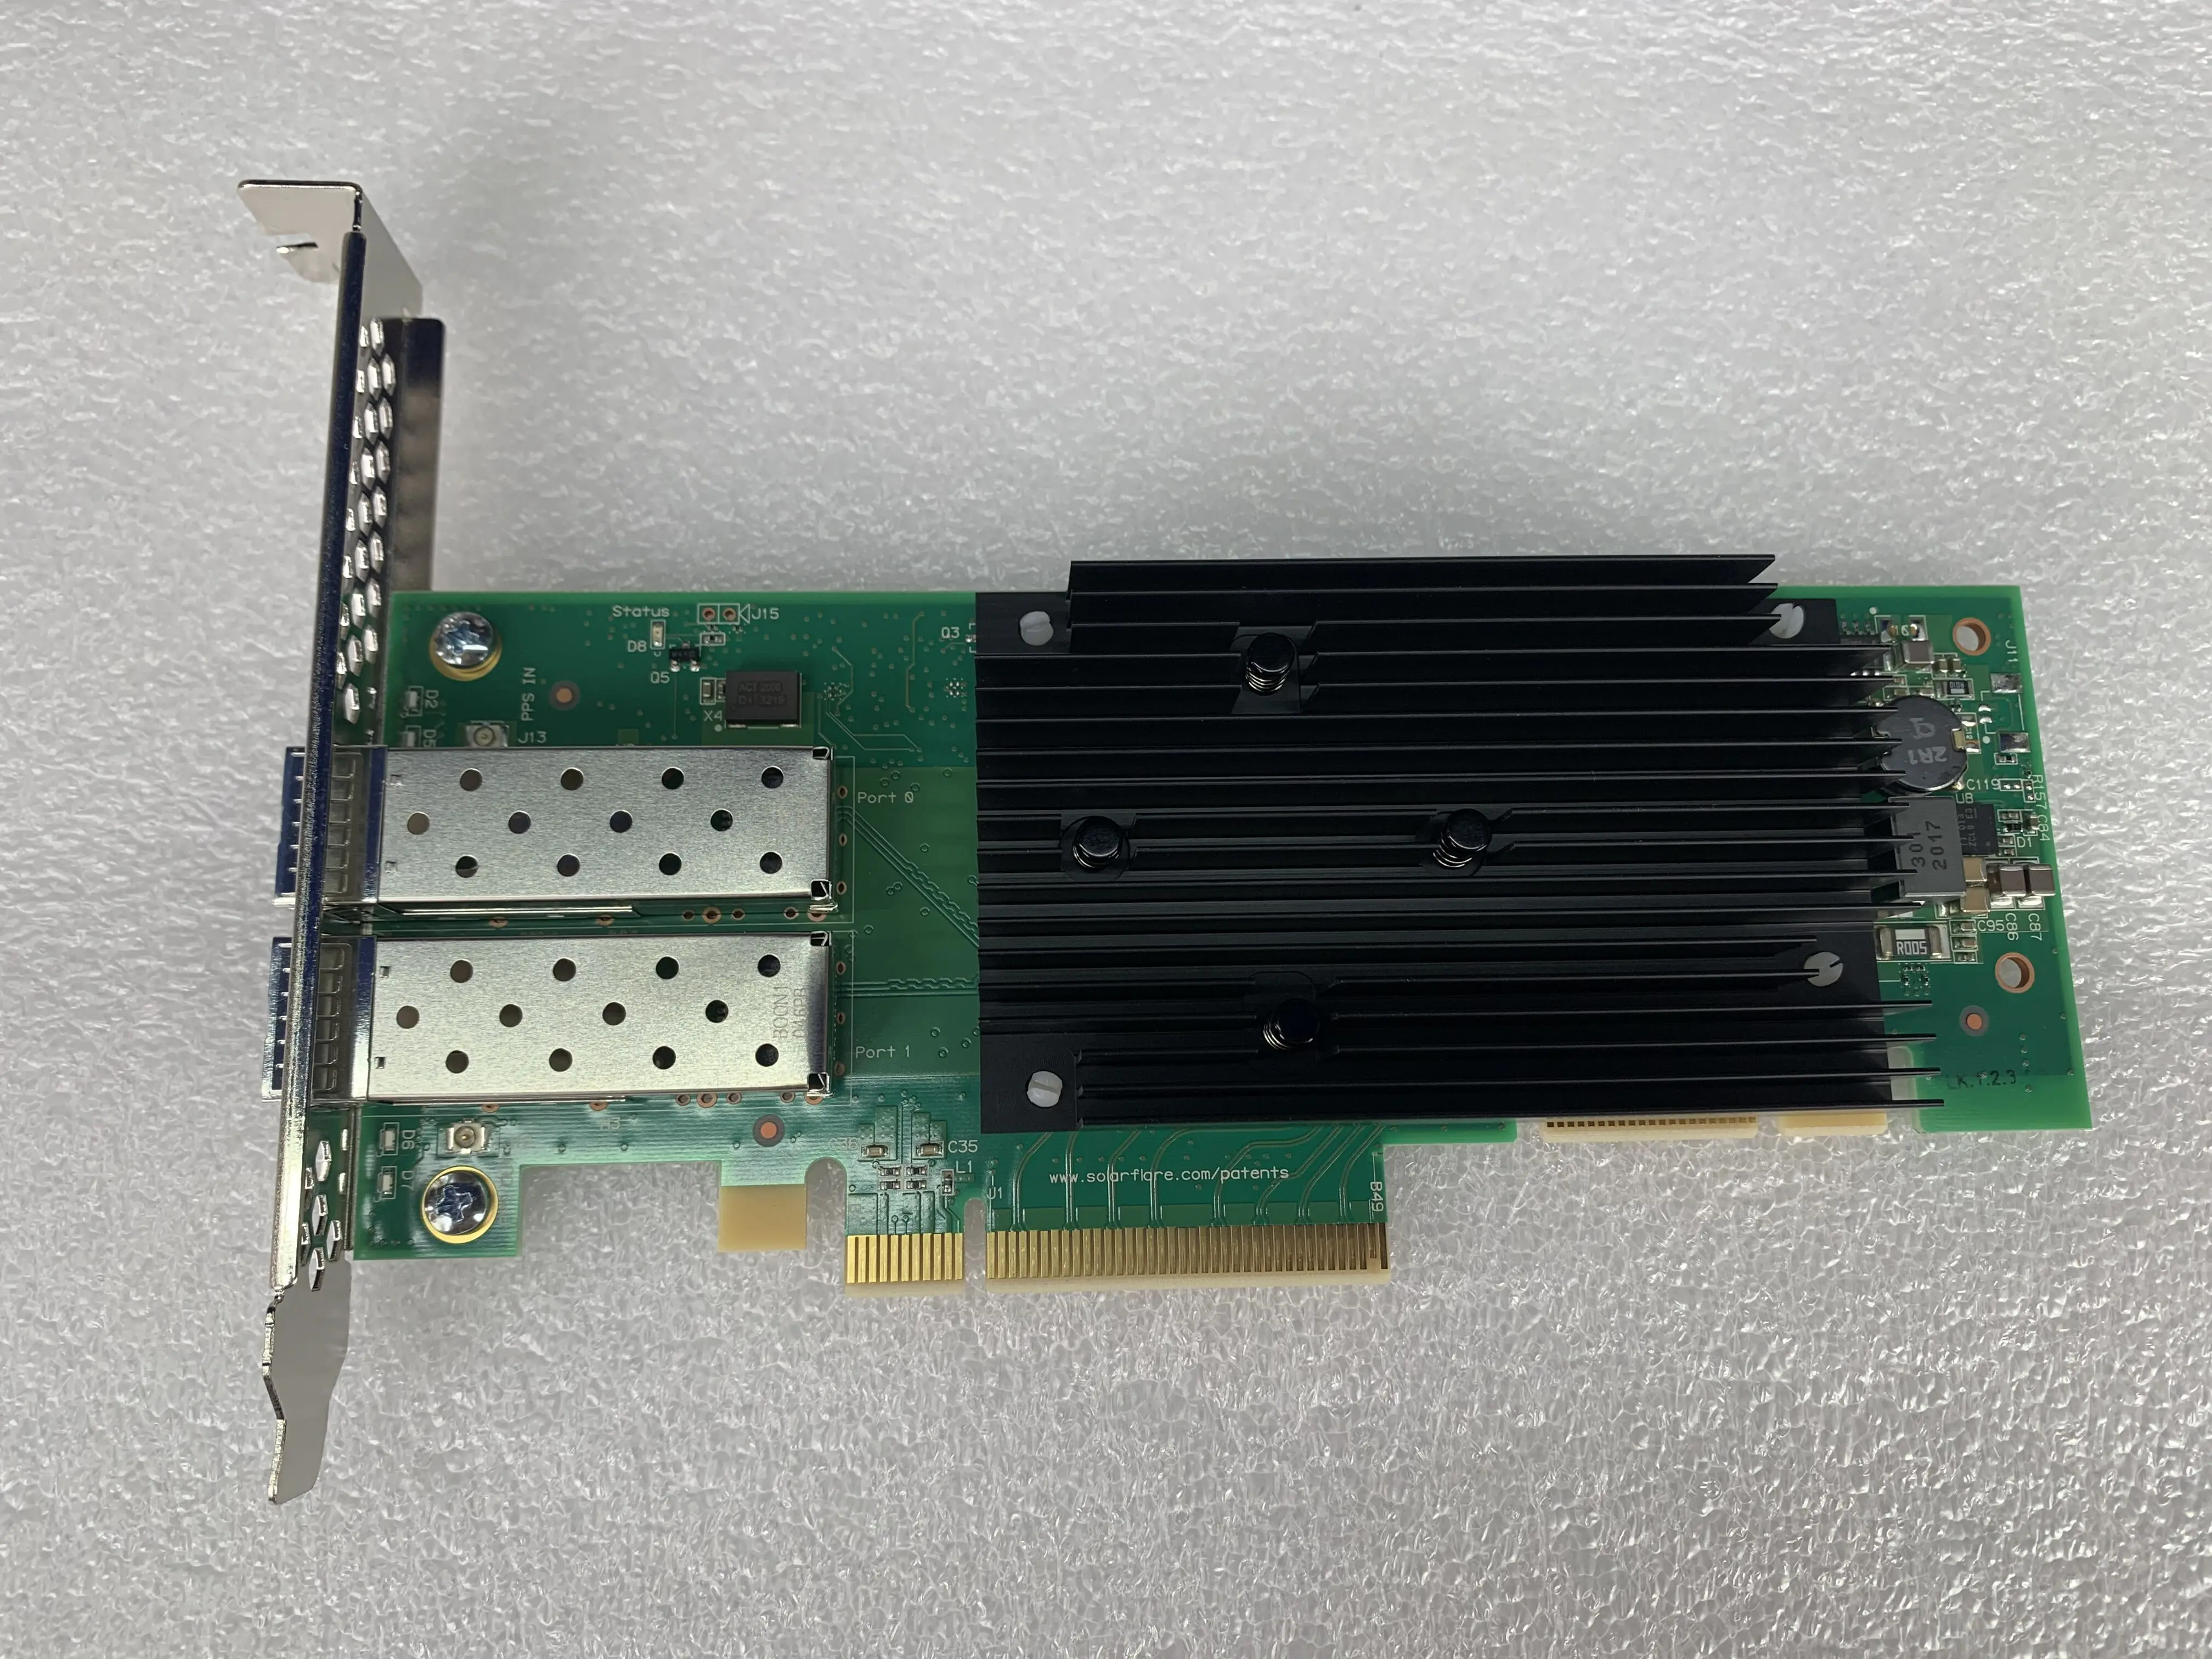 SX2522 25G Dual Port 10/25GbE PCI-E Server Adapter network card